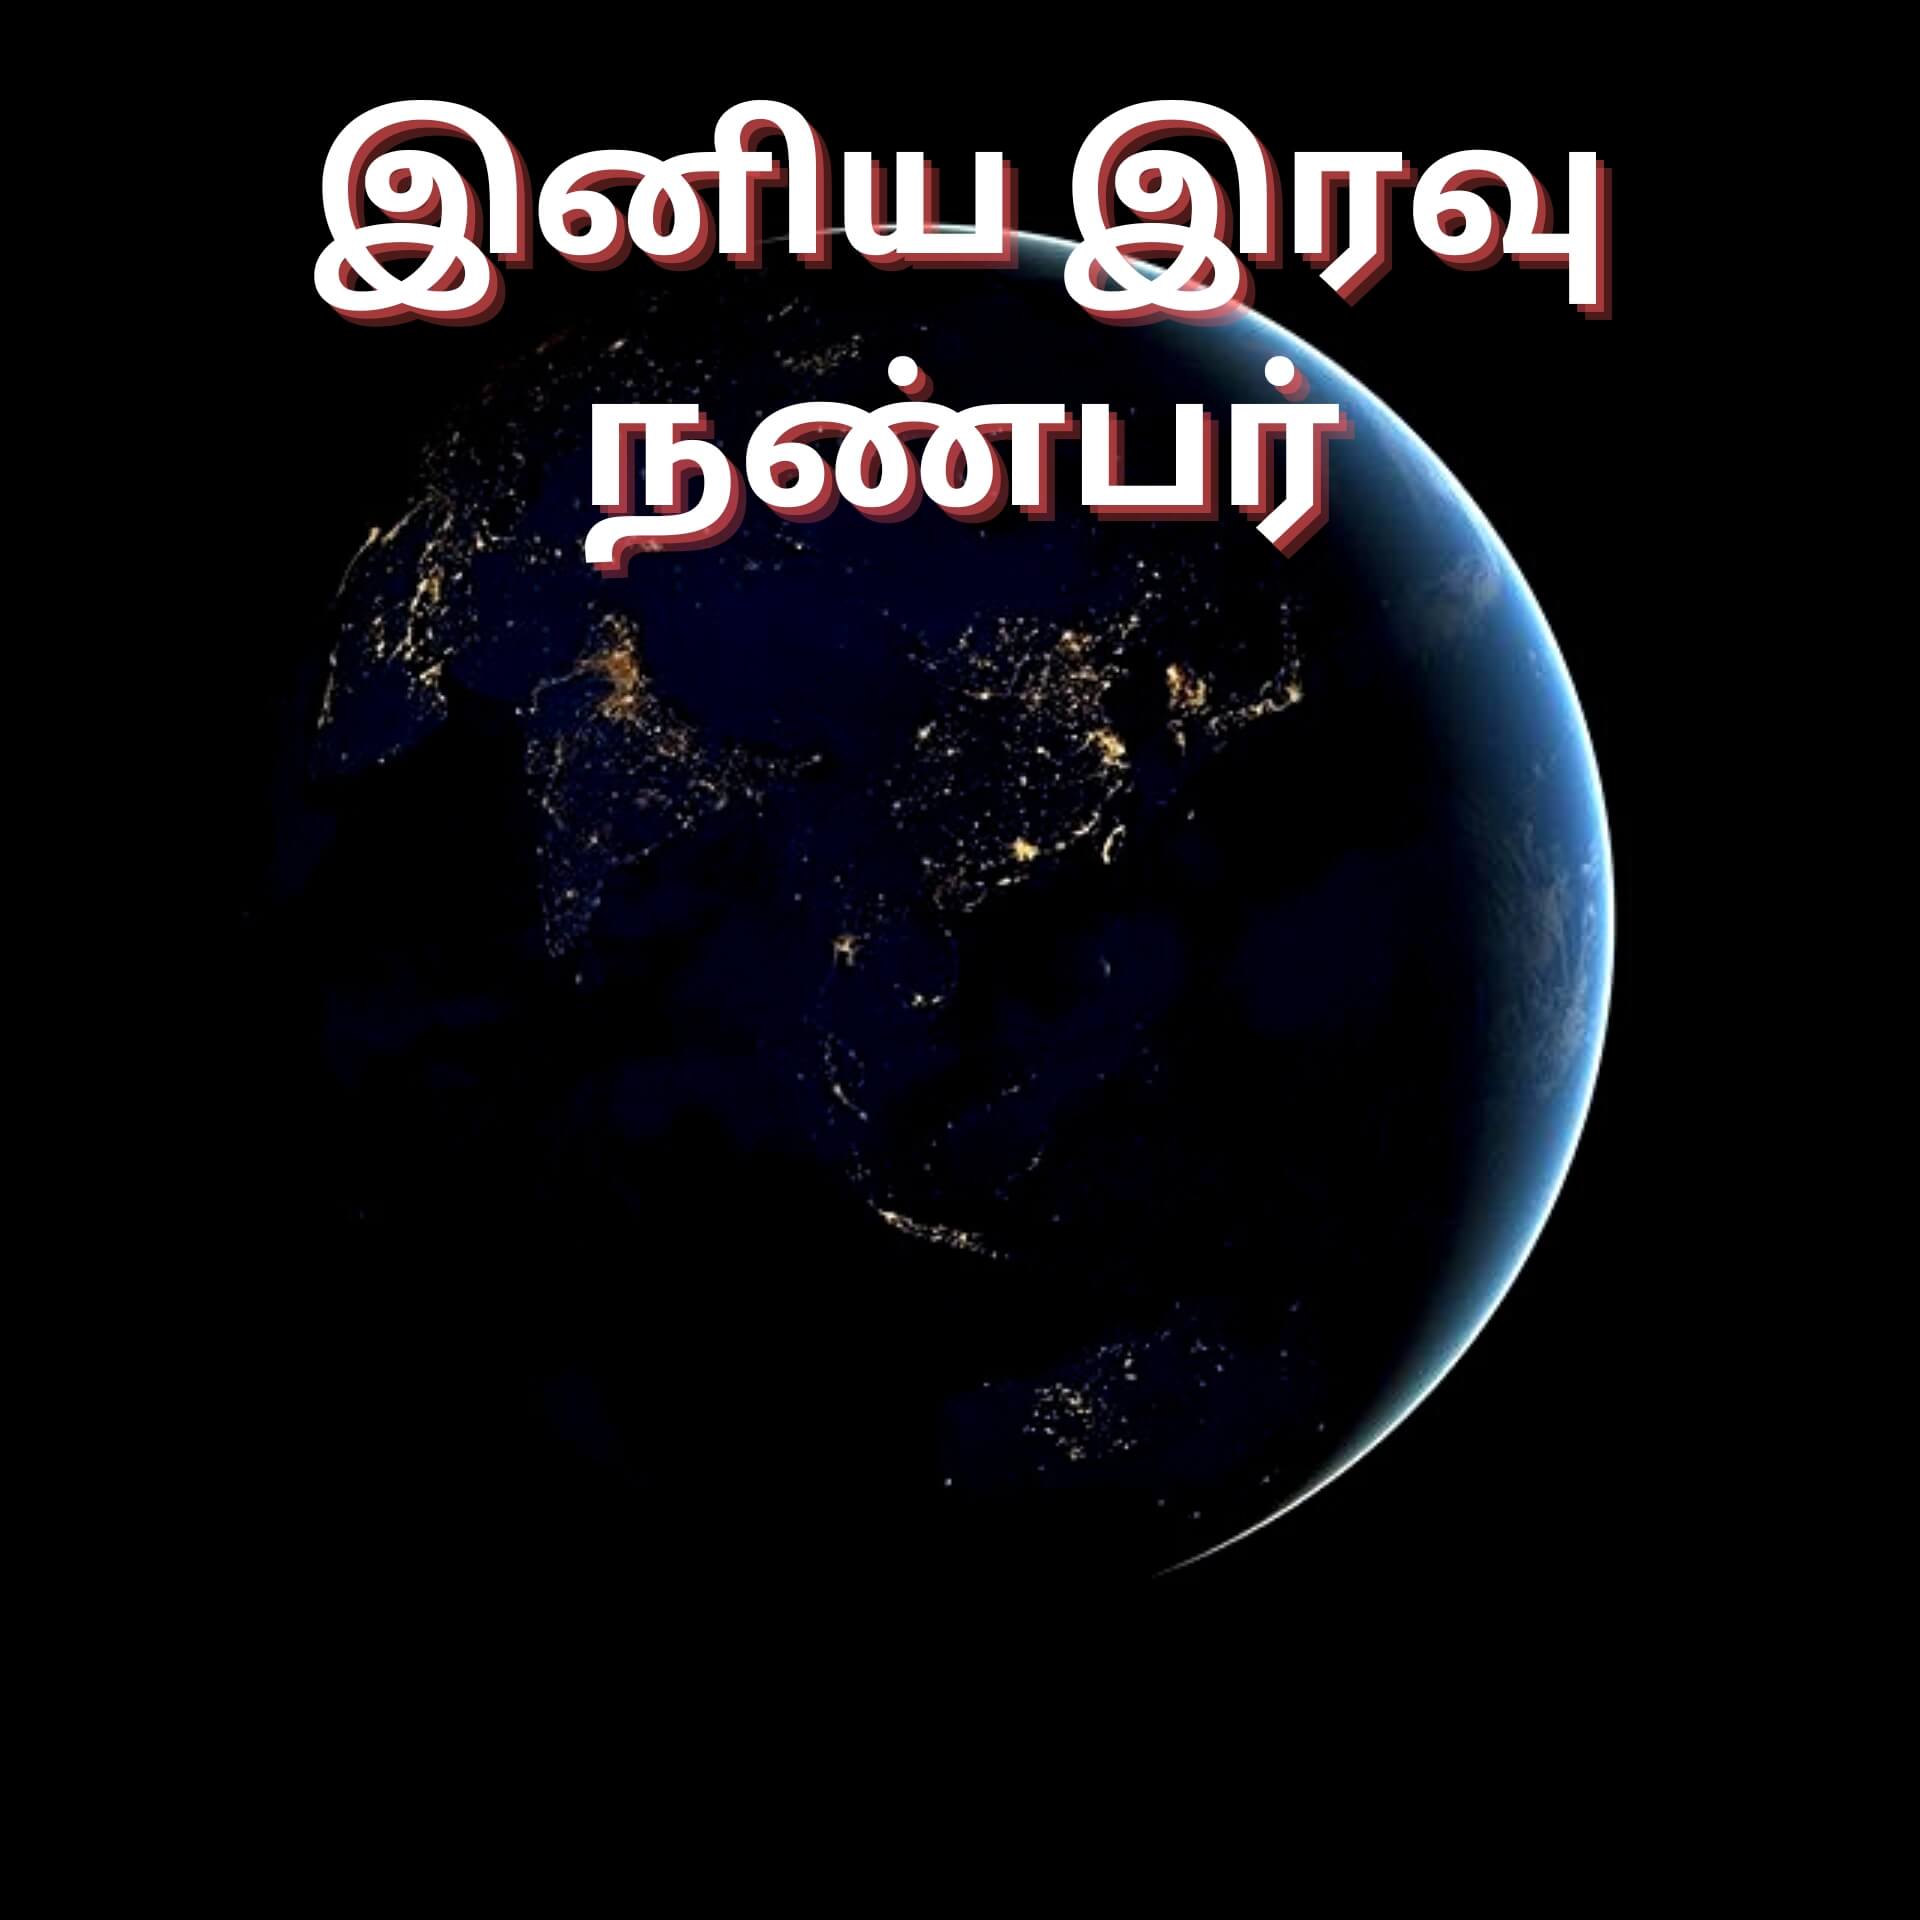 Tamil Good Night Wallpaper pics Download Free